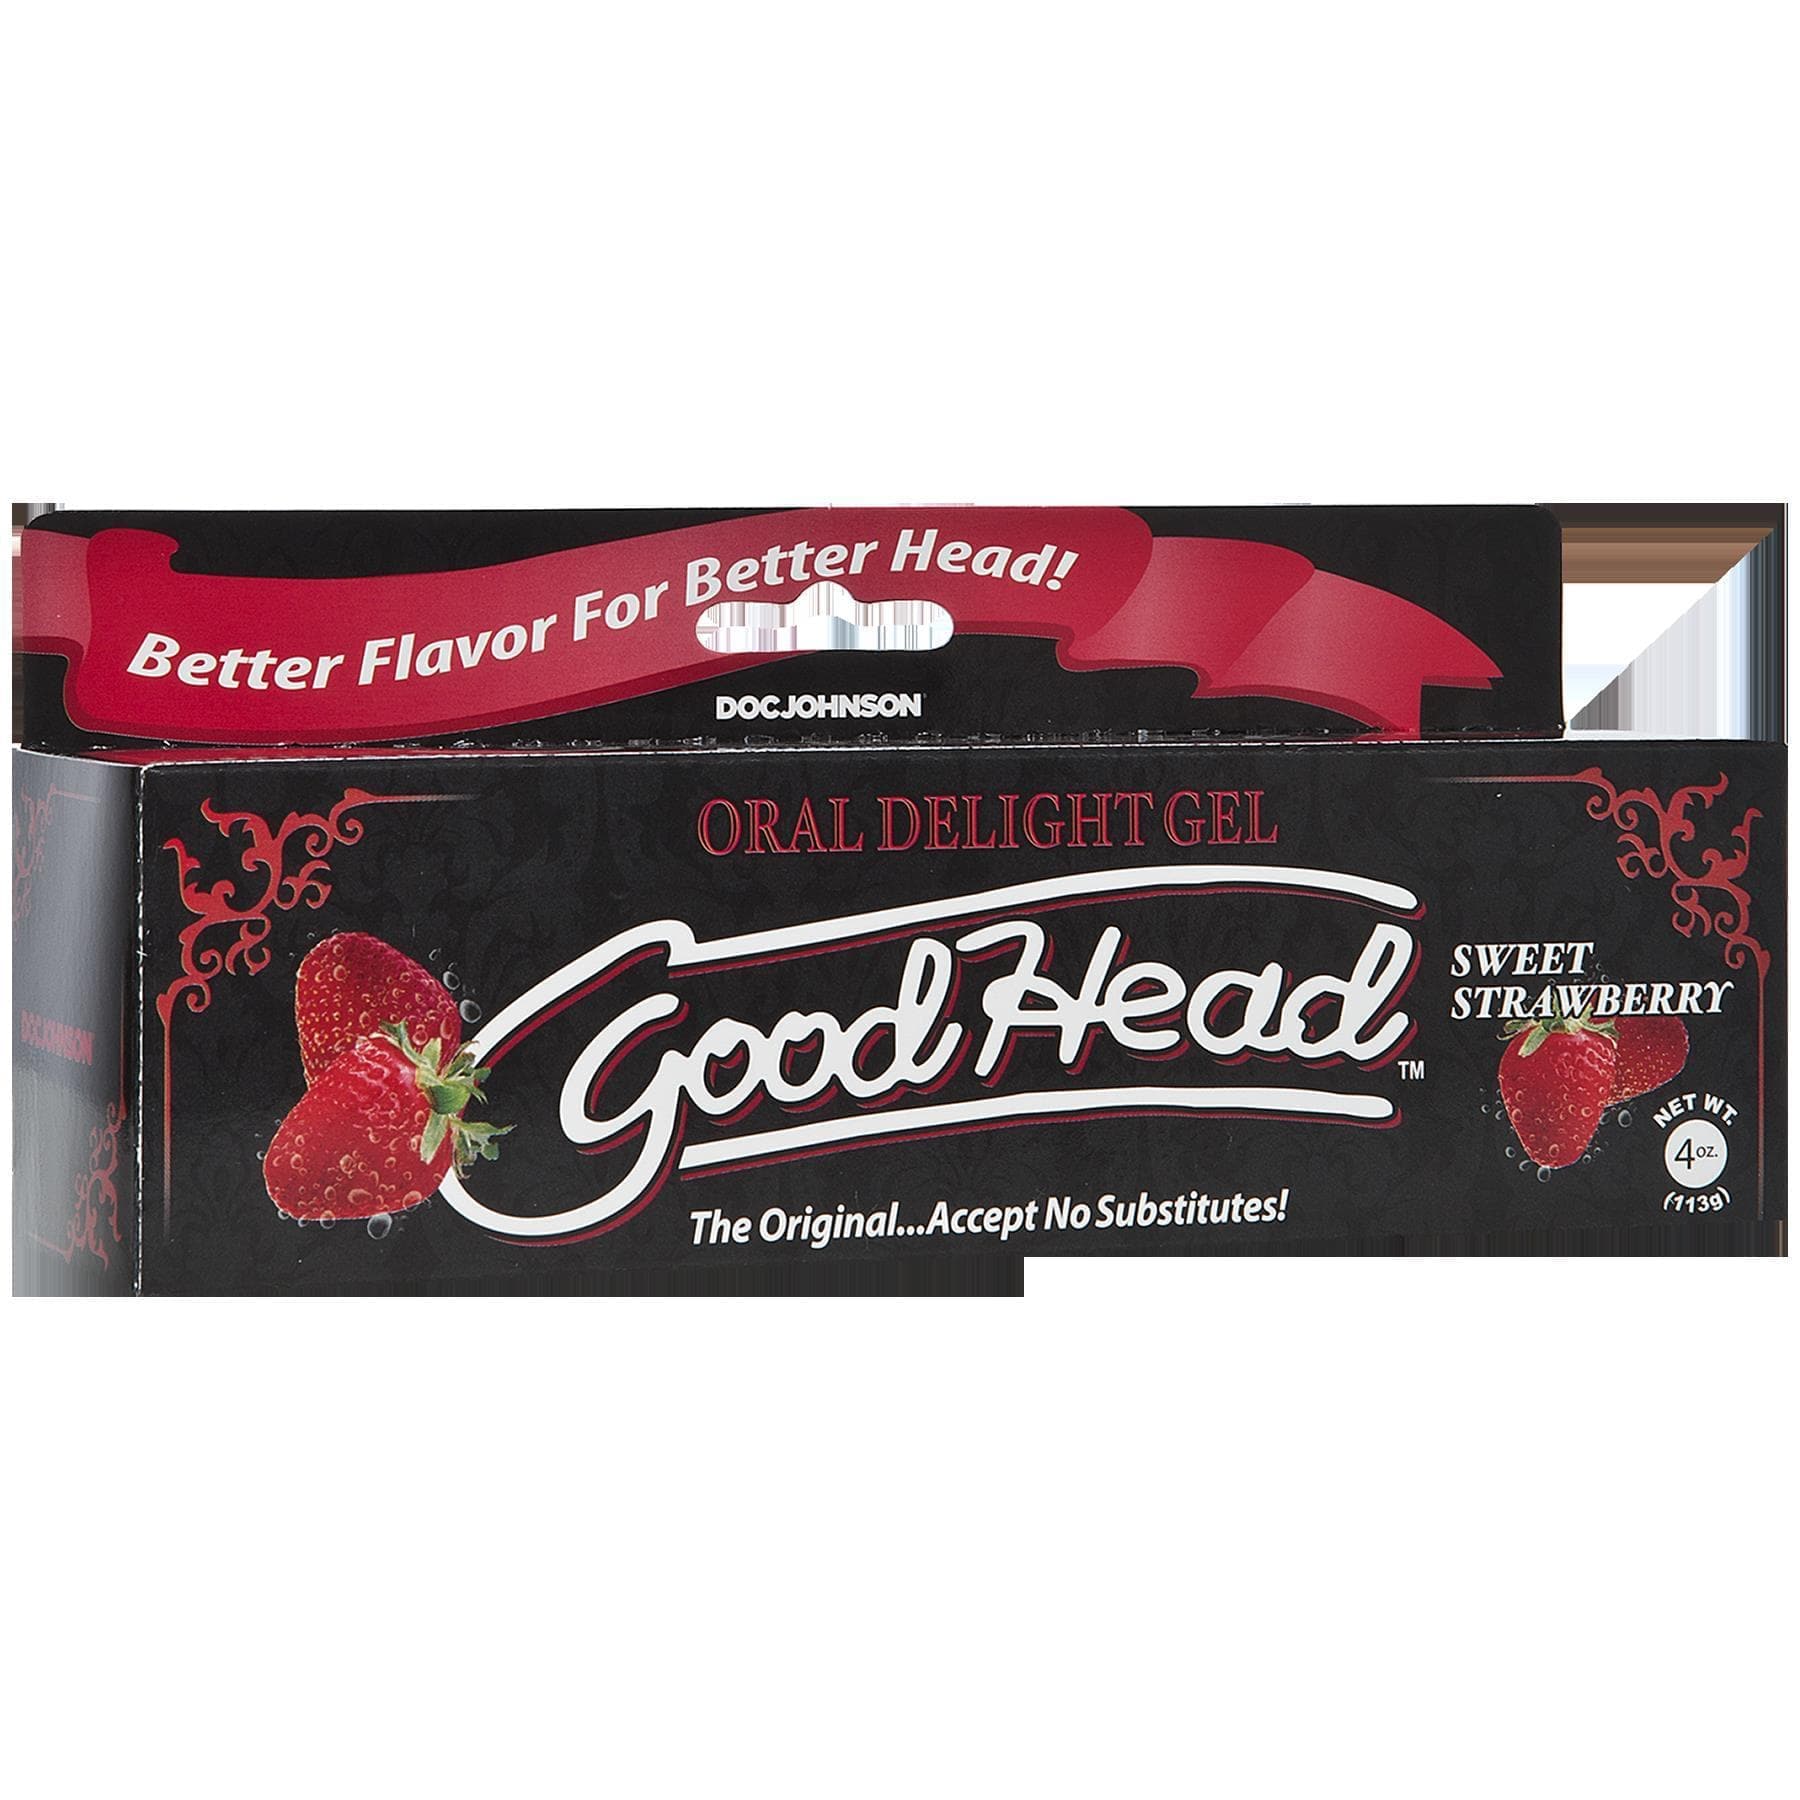 good head oral delight gel 4 oz strawberry